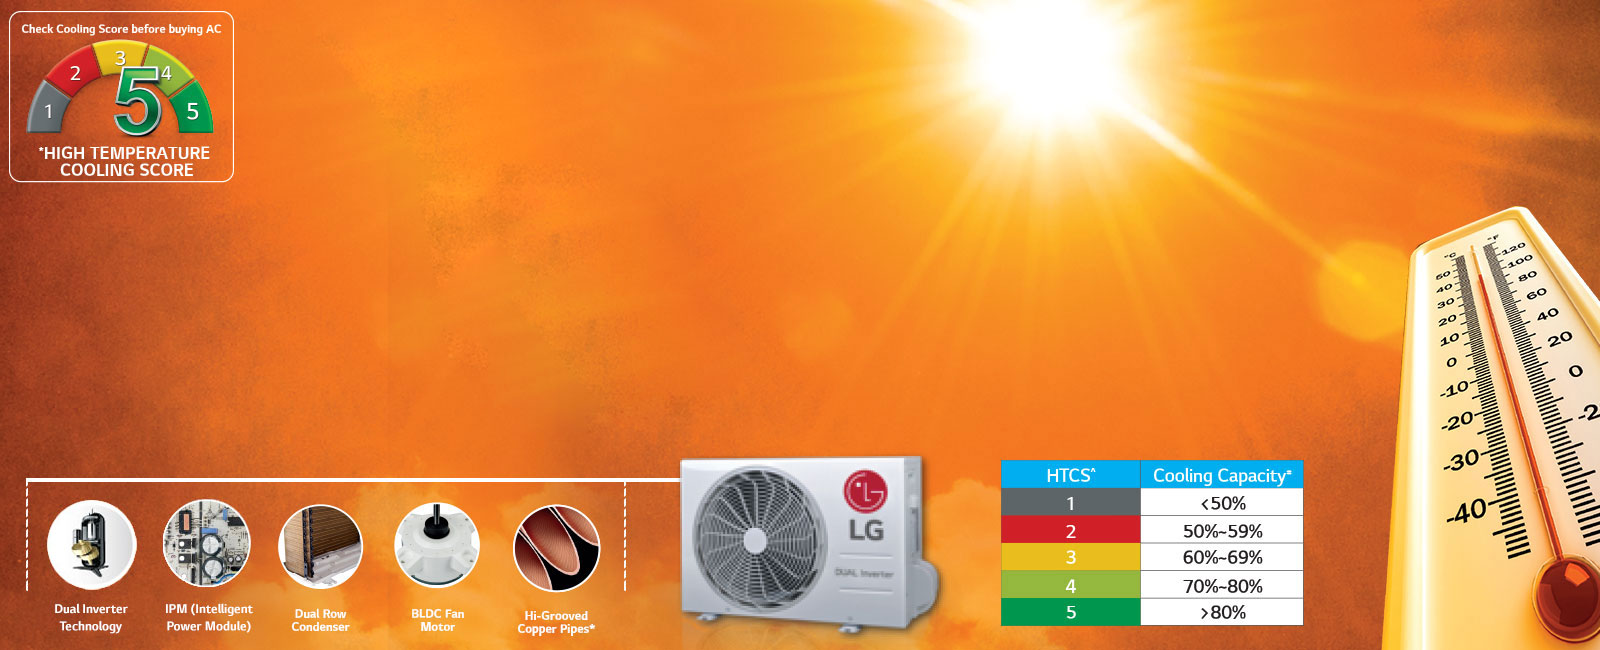 LG LS-Q12HNZA High Temperature Cooling Score